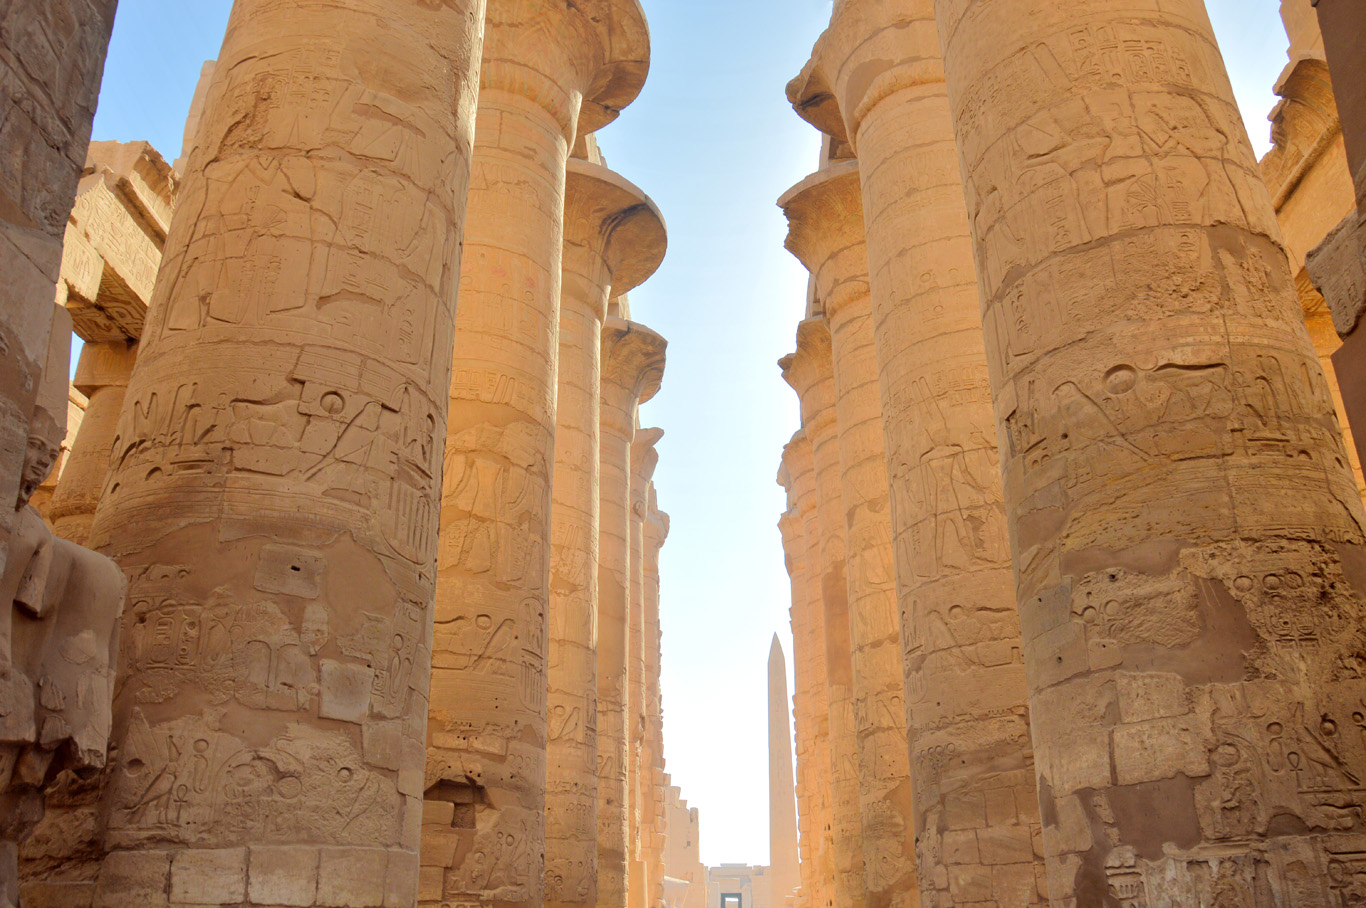   Columns of Karnak Temple     more info   